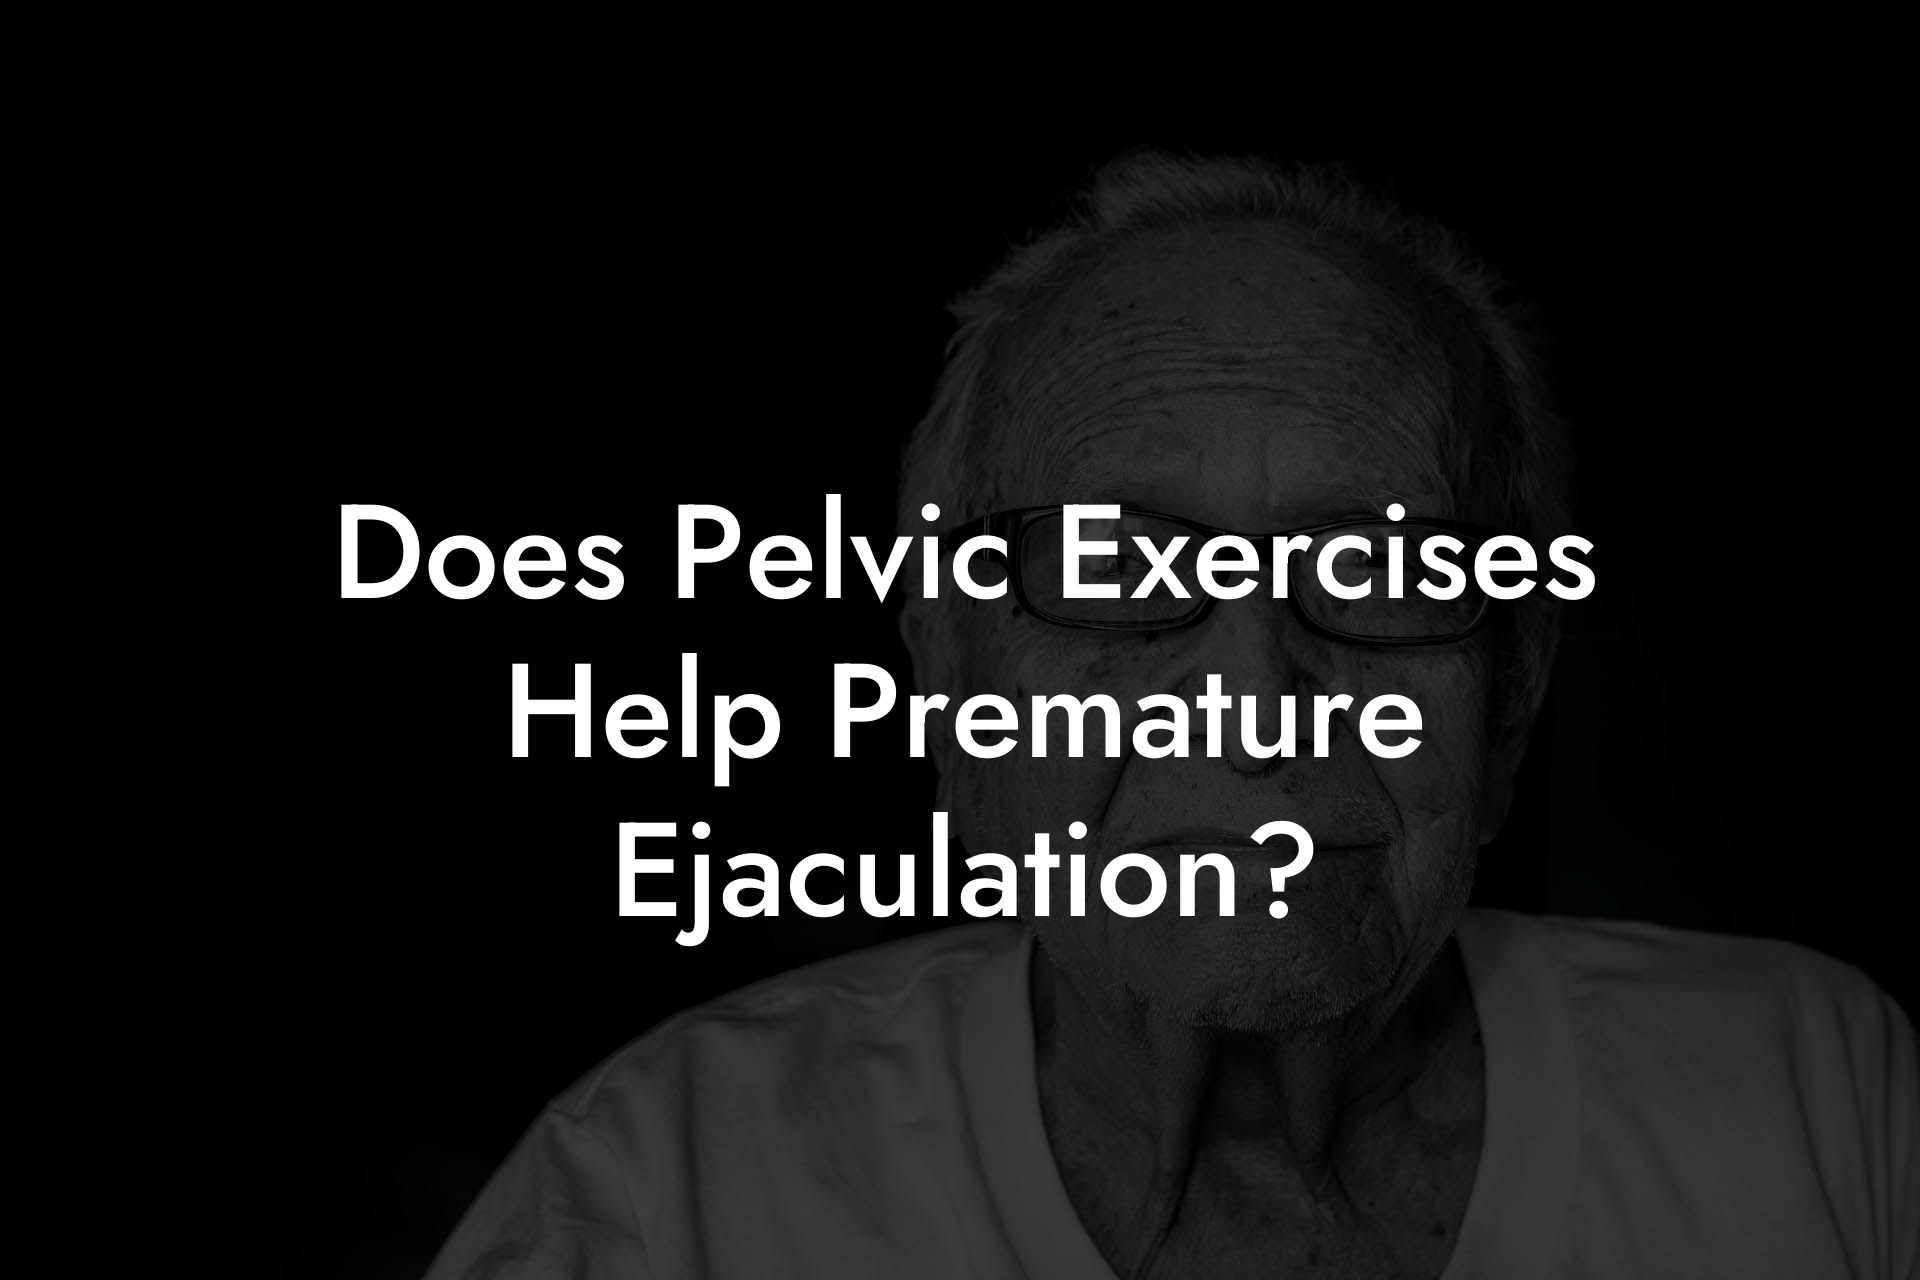 Does Pelvic Exercises Help Premature Ejaculation?